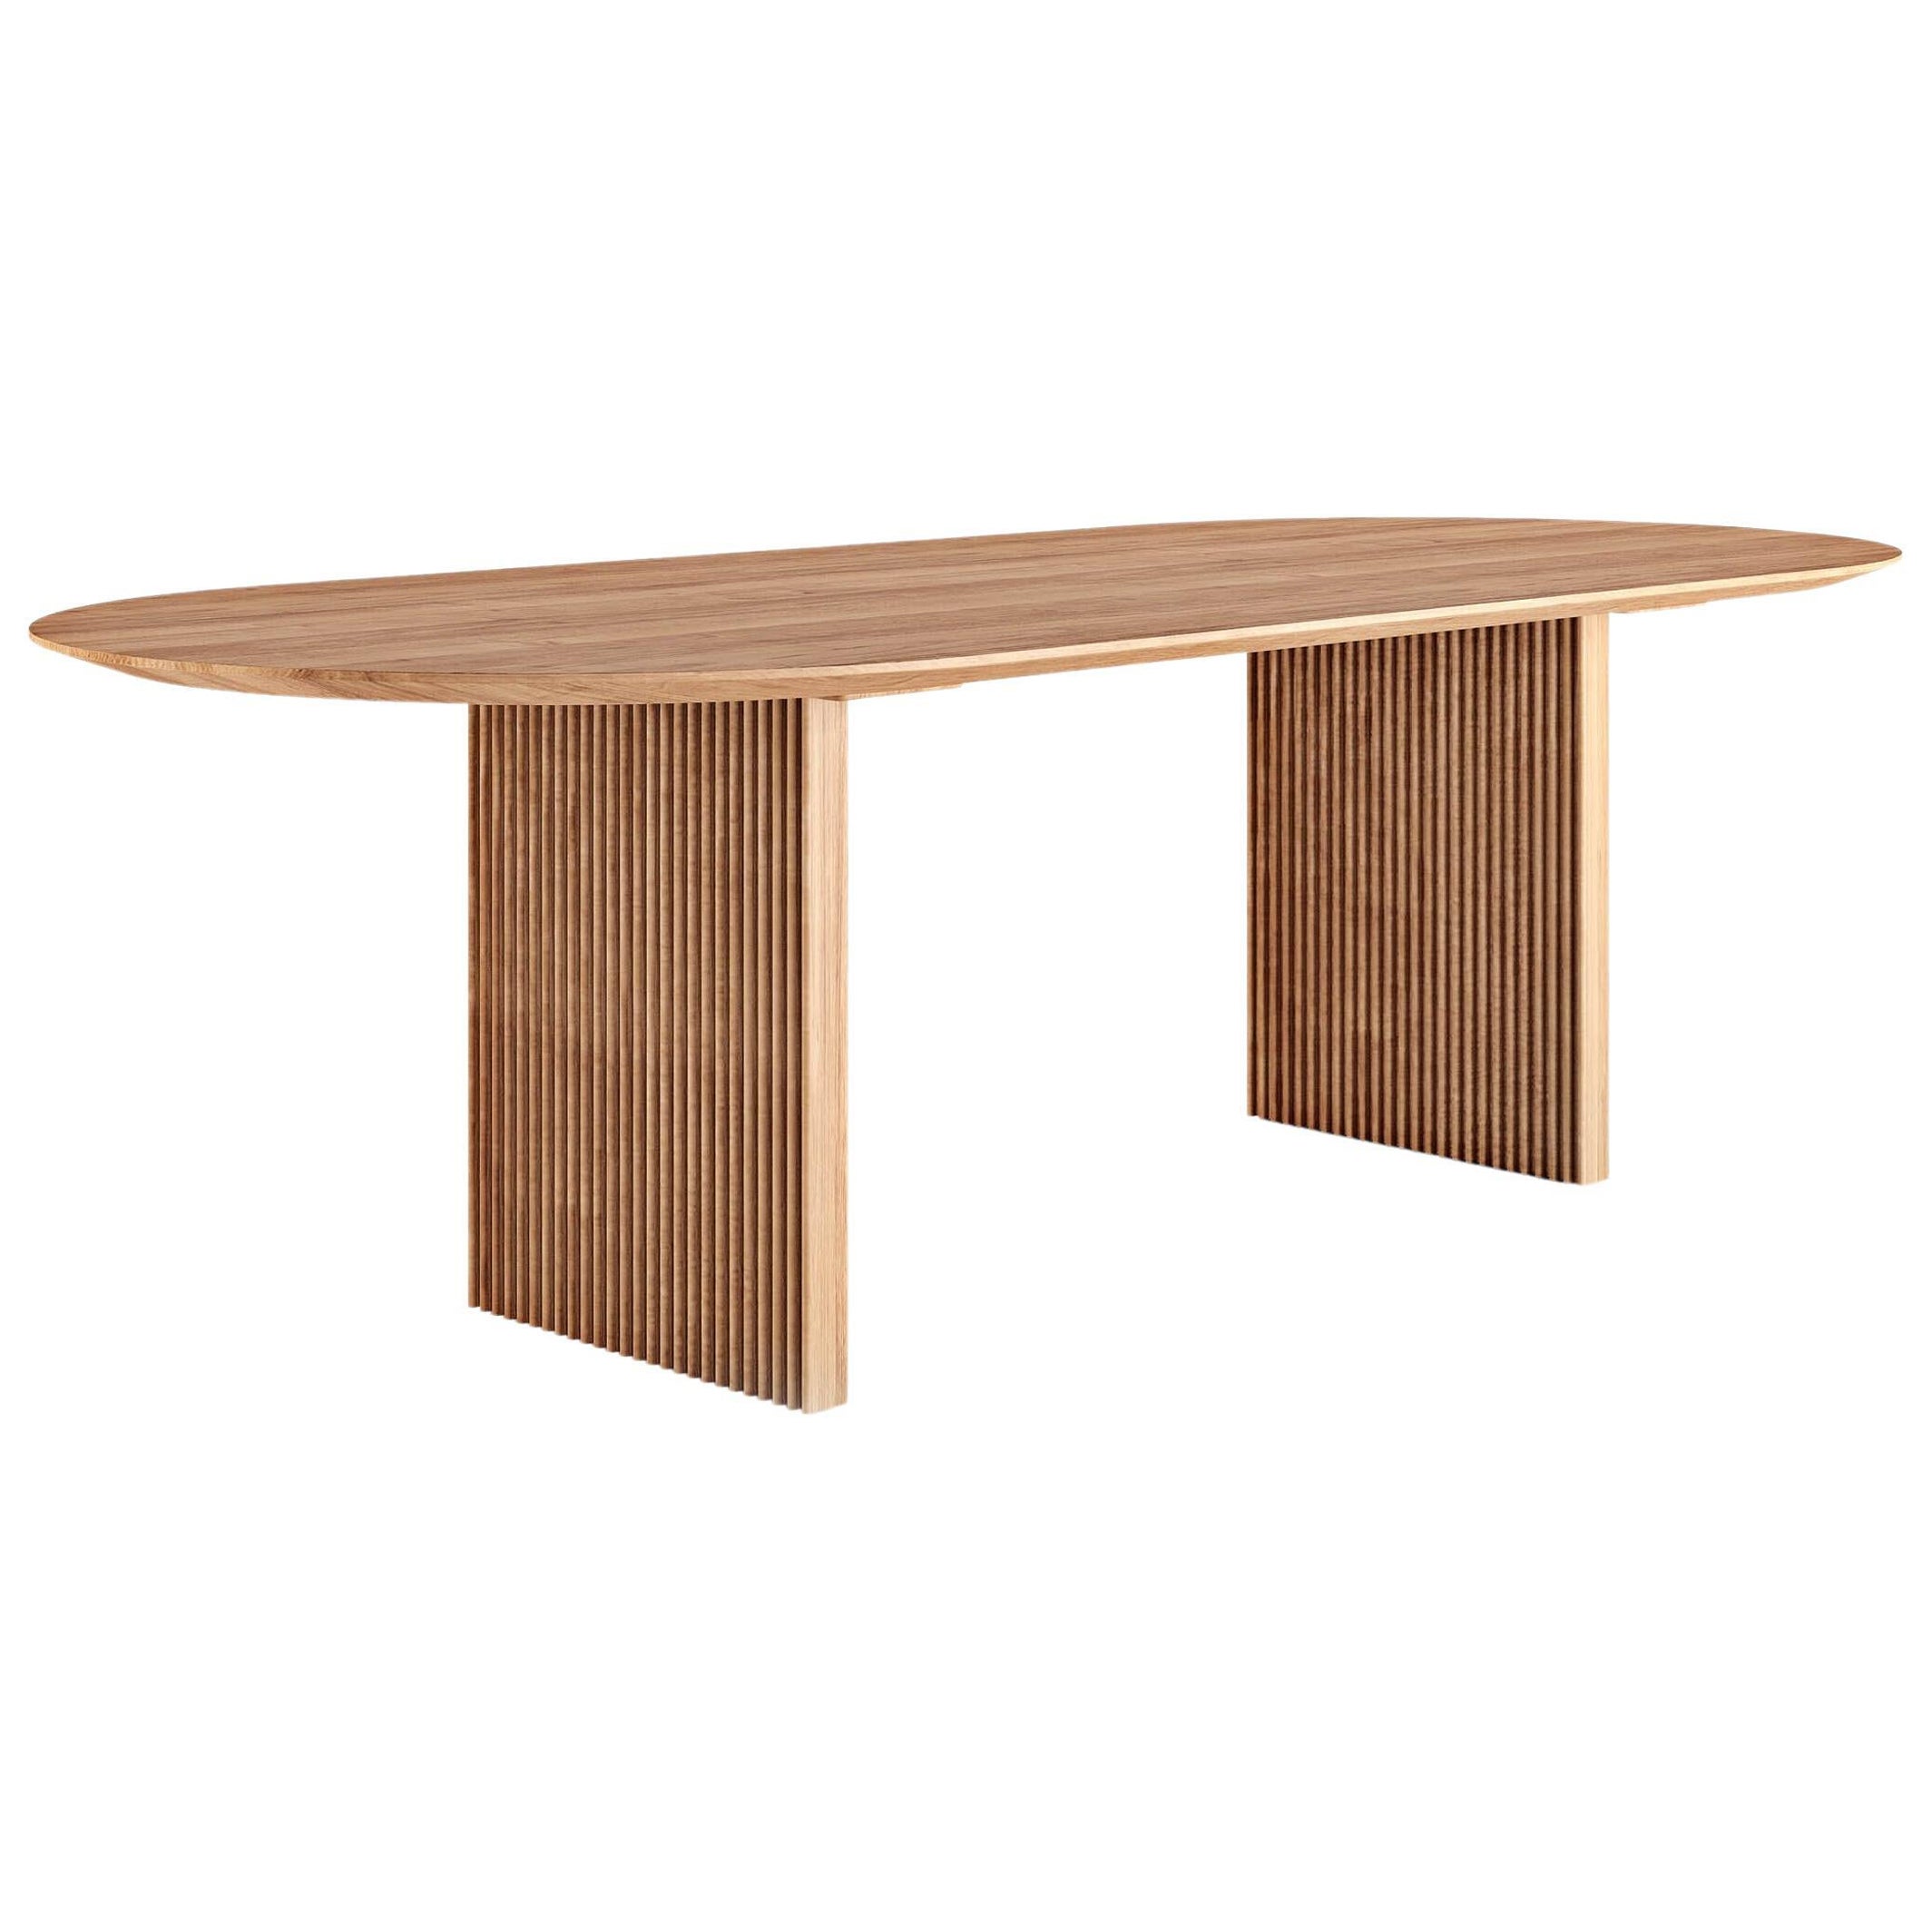 Contemporary Oval Ten Table 400, Light Oak